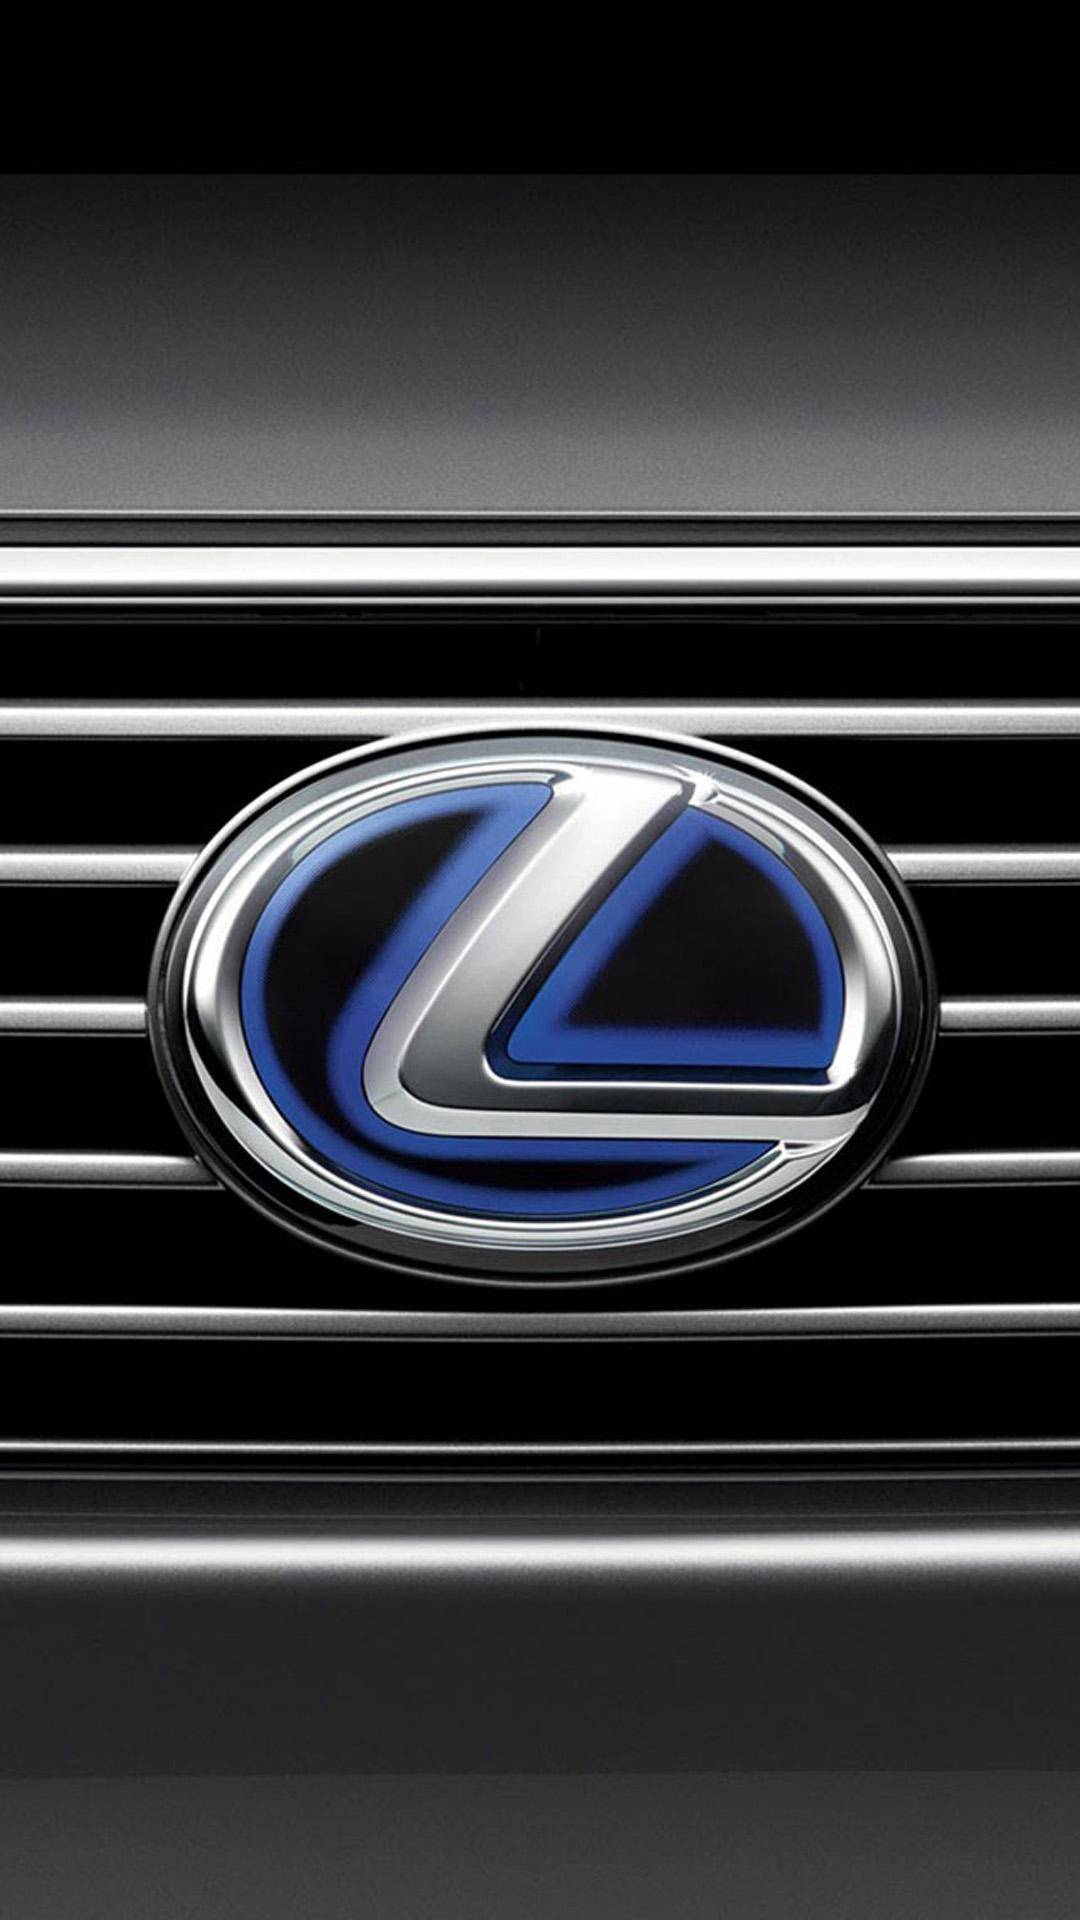 Lexus Emblem Iphone Background